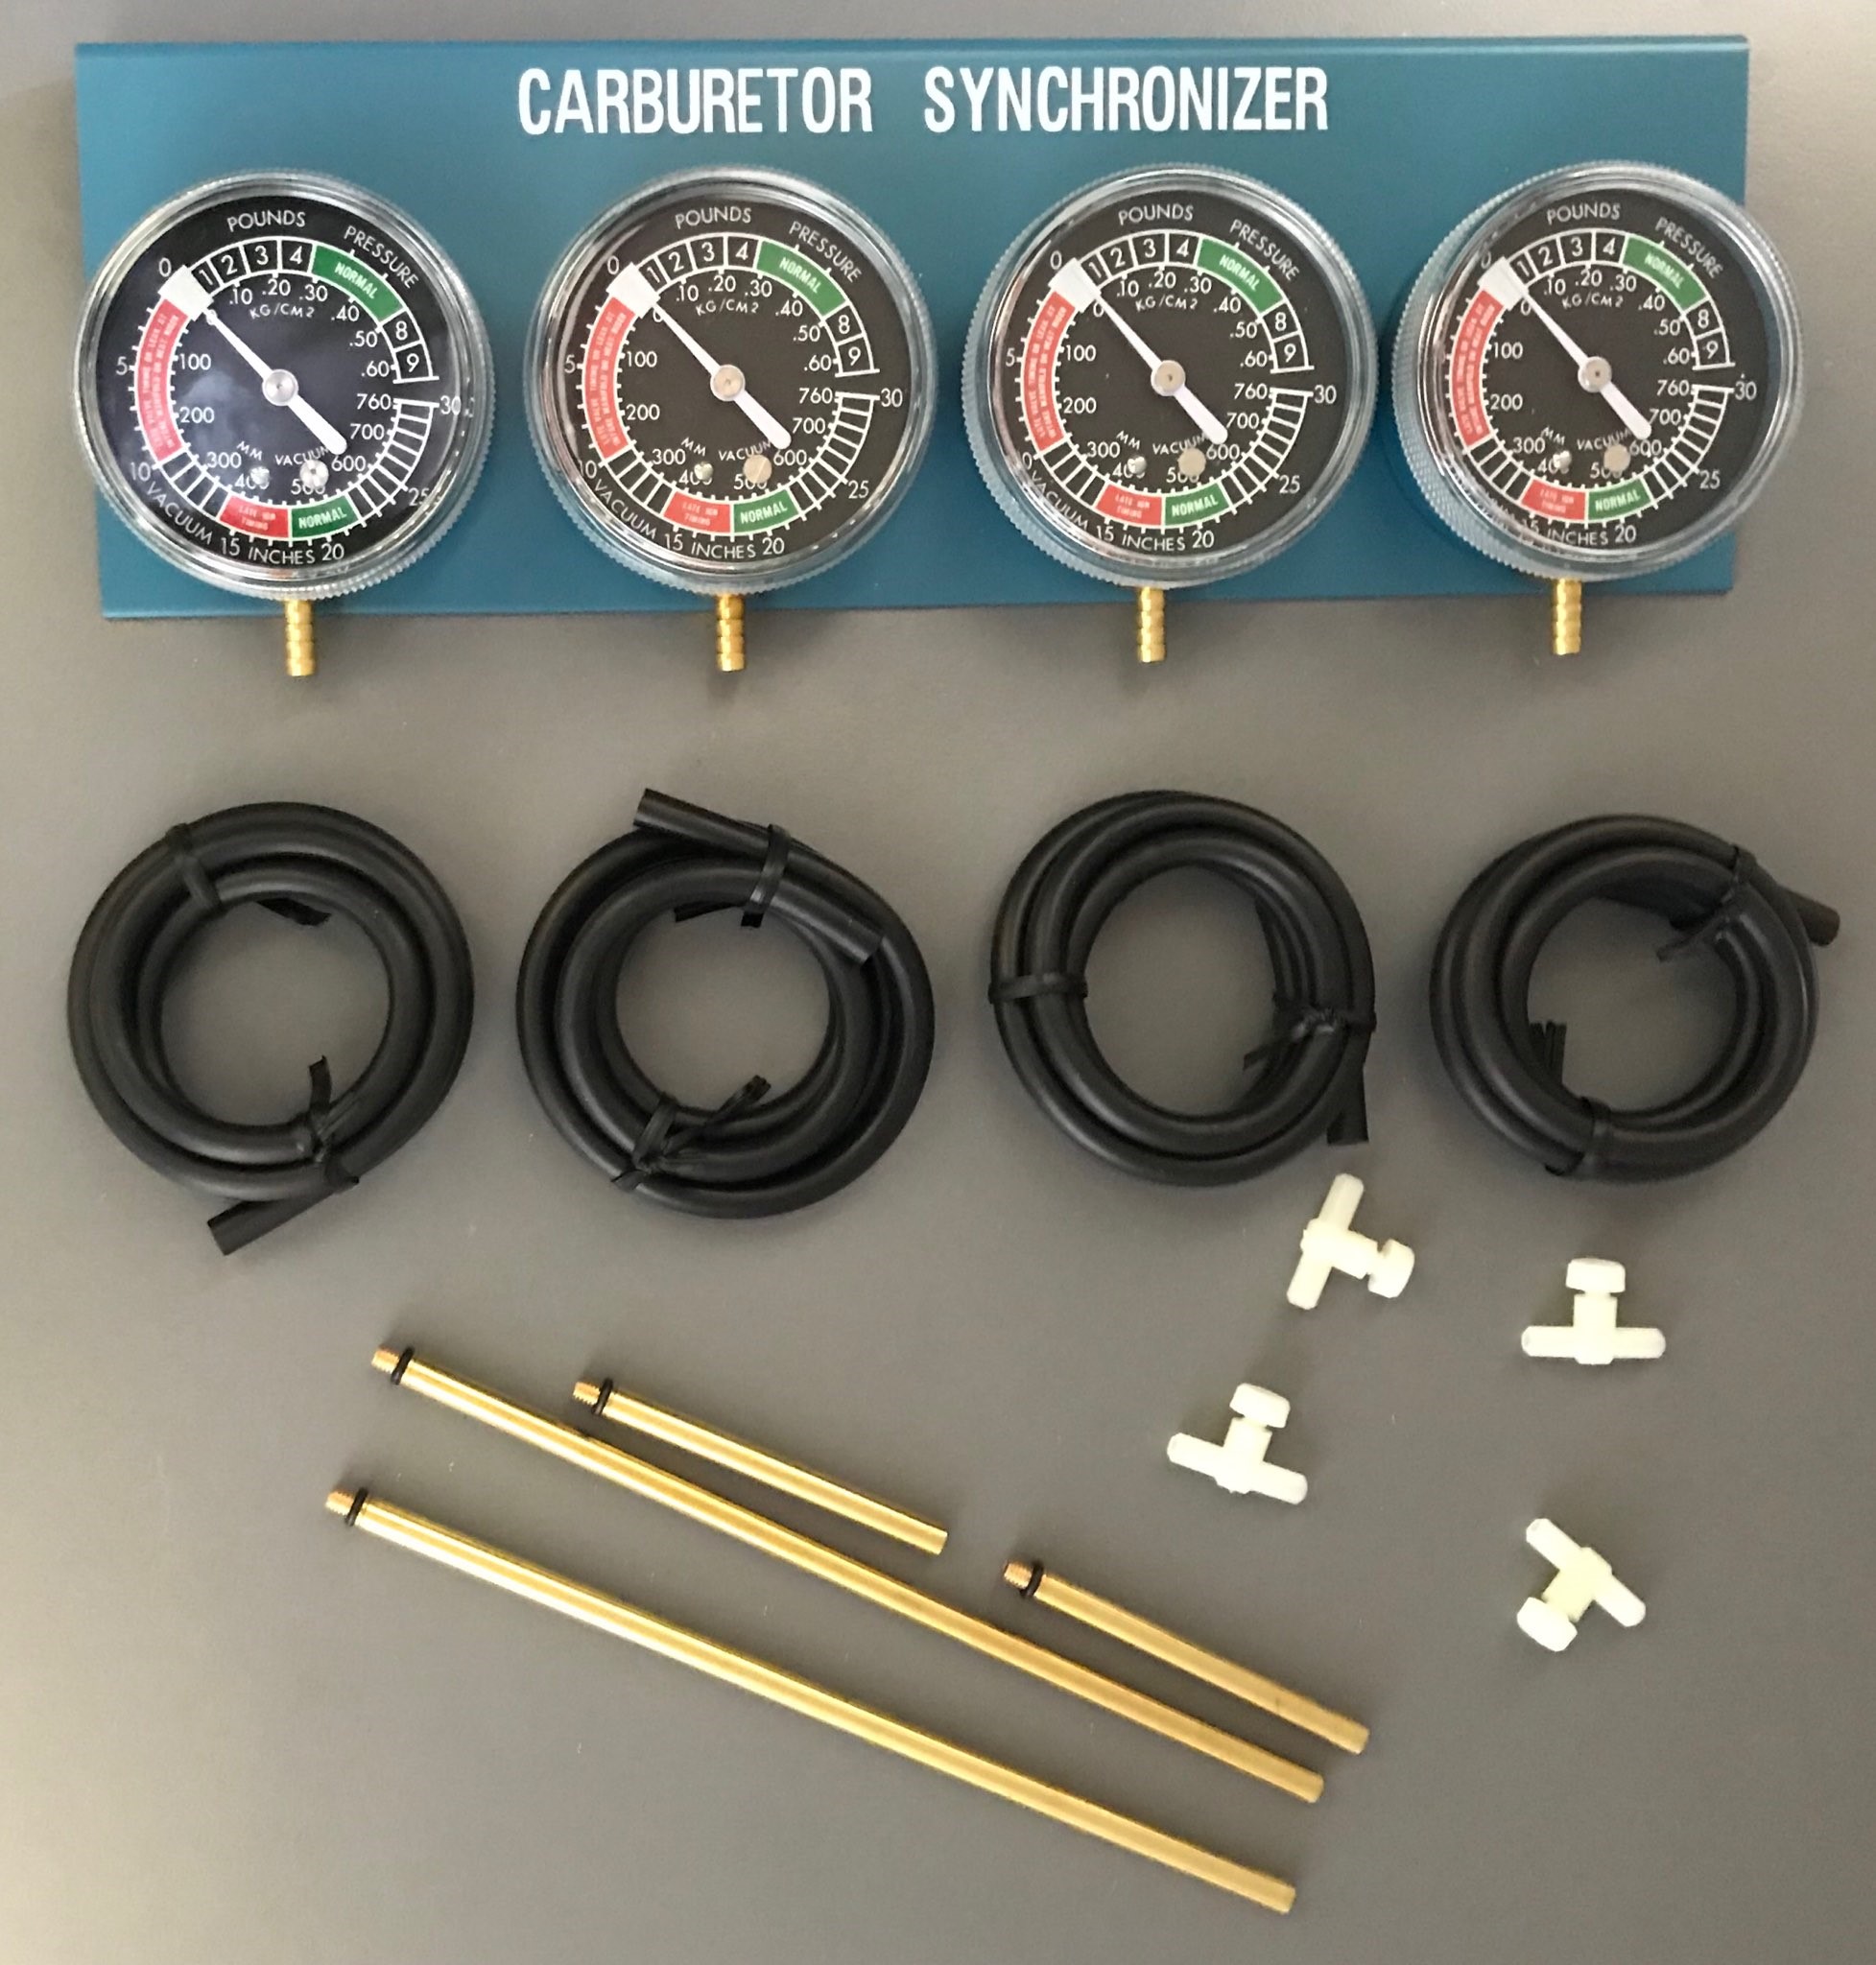 Four Carburetor Synchronize Vacuum Gauge Kit